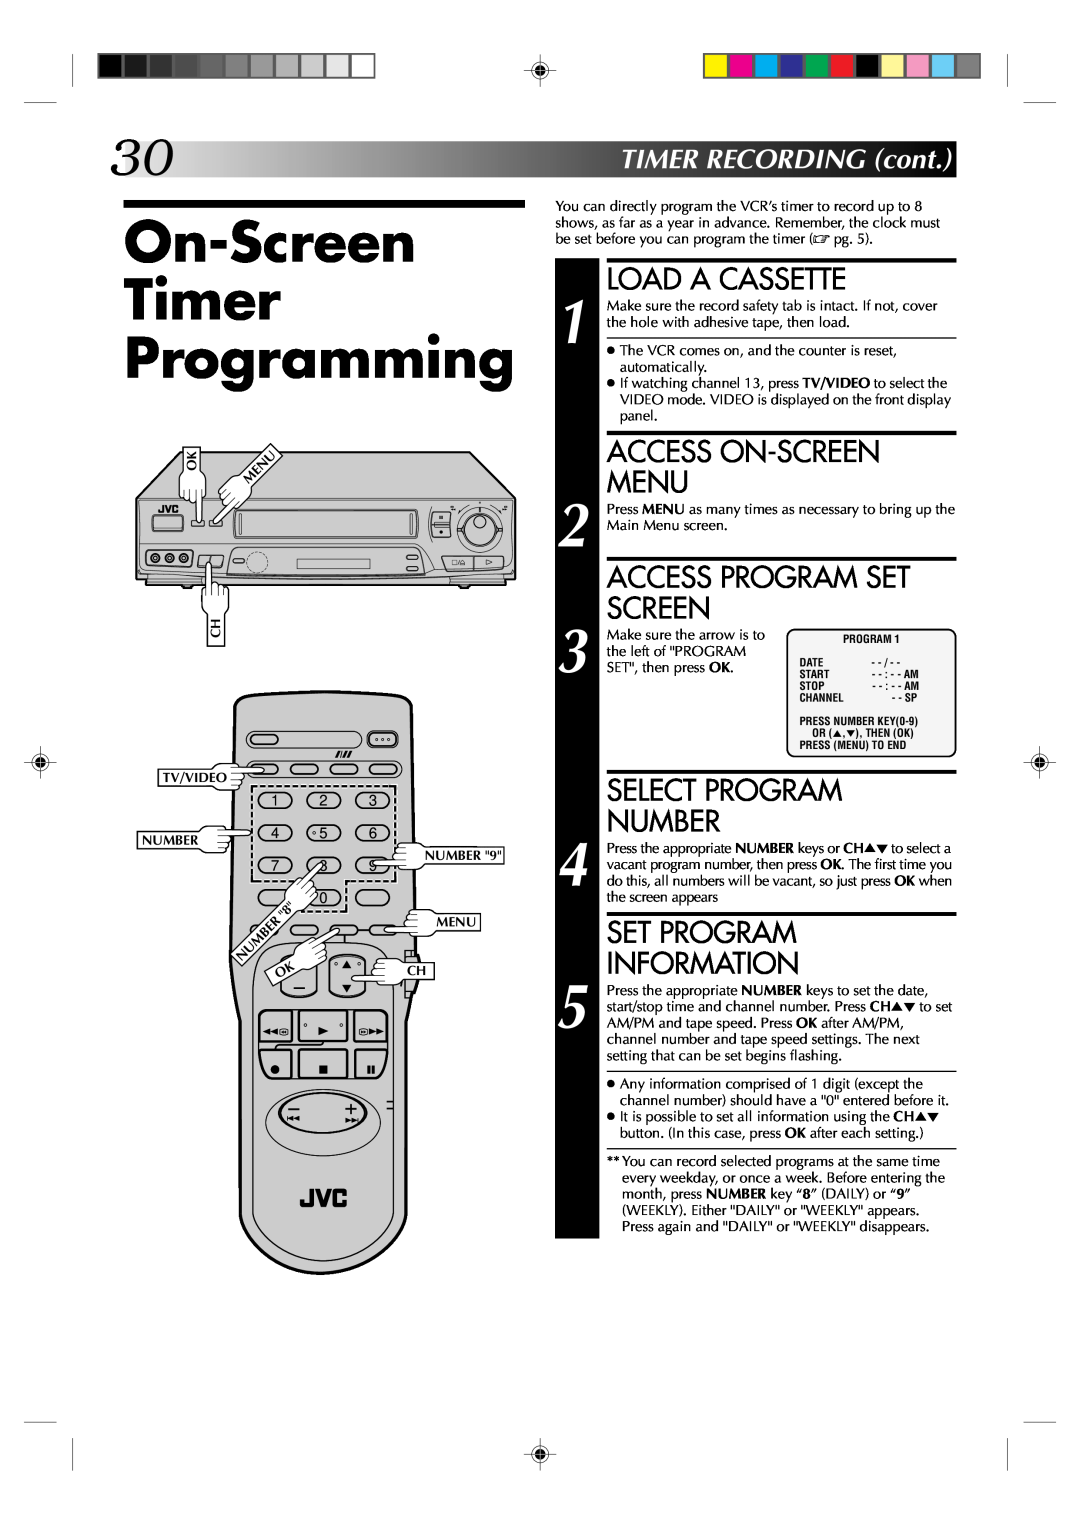 JVC HR-J631T On-Screen Timer Programming, Access On-Screen, Menu, Access Program Set, Select Program, Set Program, Number 